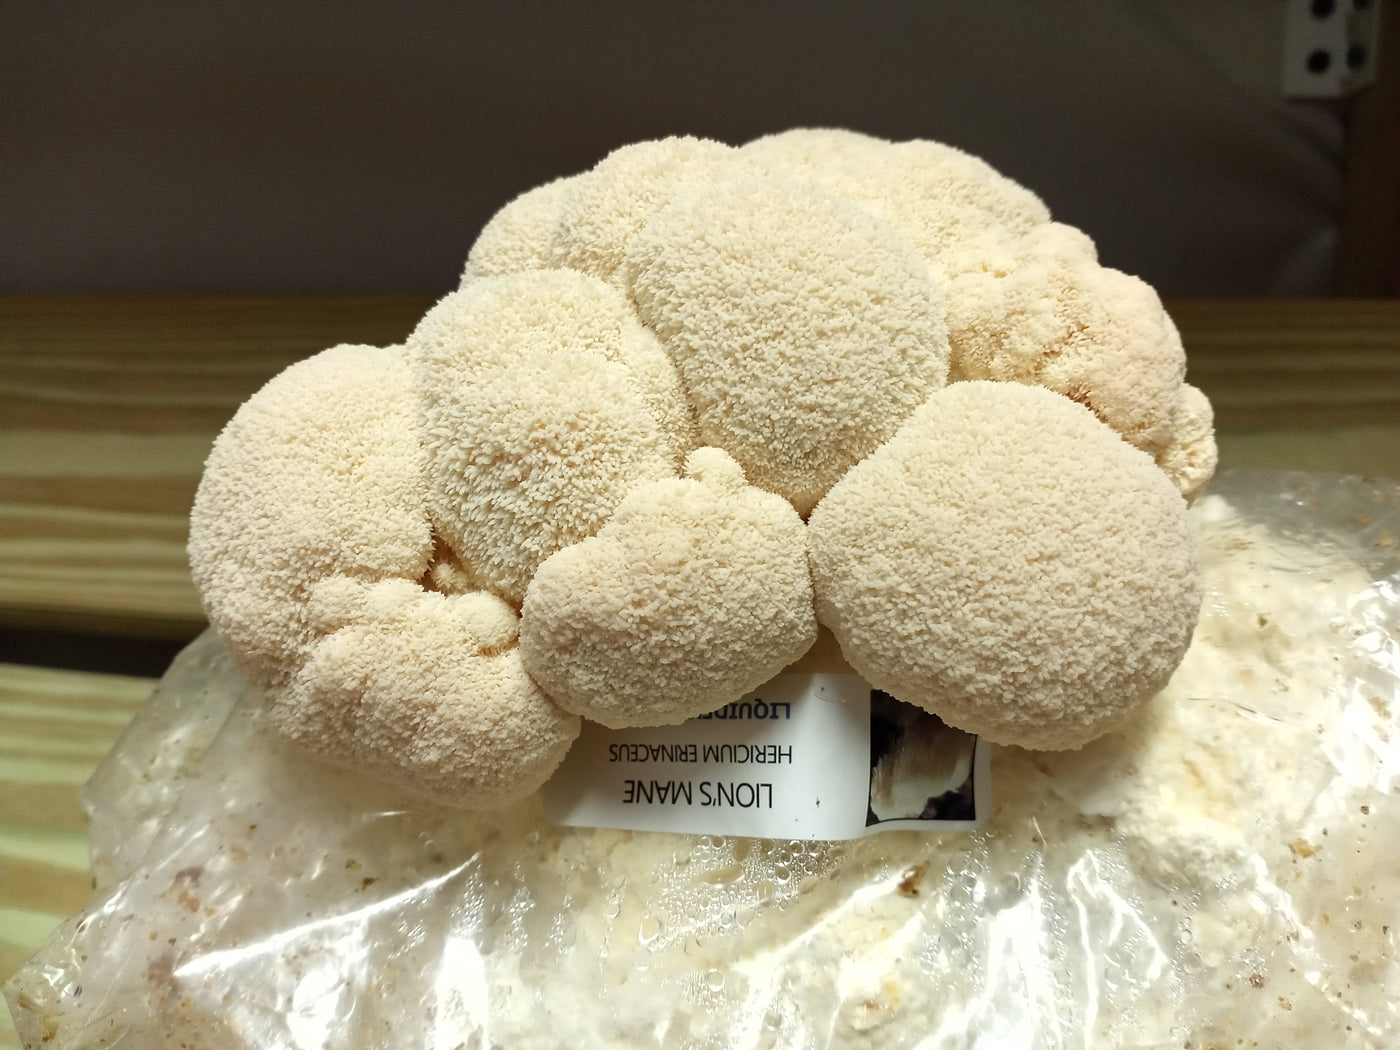 lions mane easy grow kit simple large mushrooms